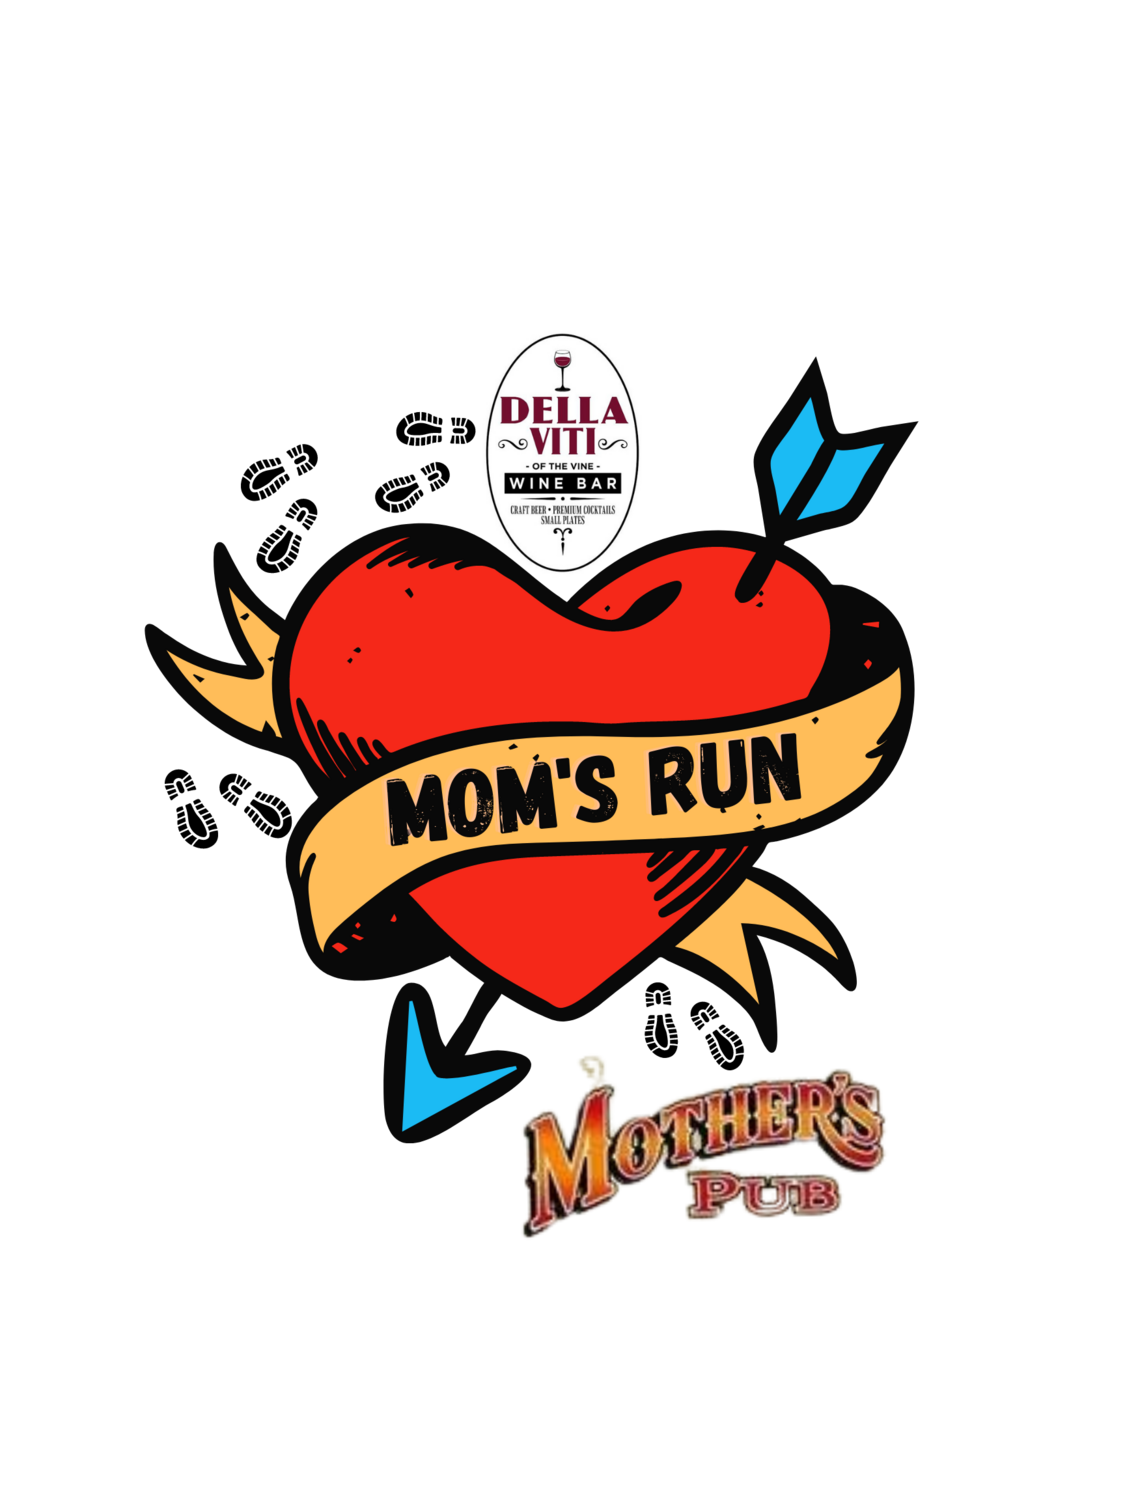 Run for your Momma! Charity 5k Run / Walk Saturday May 4th